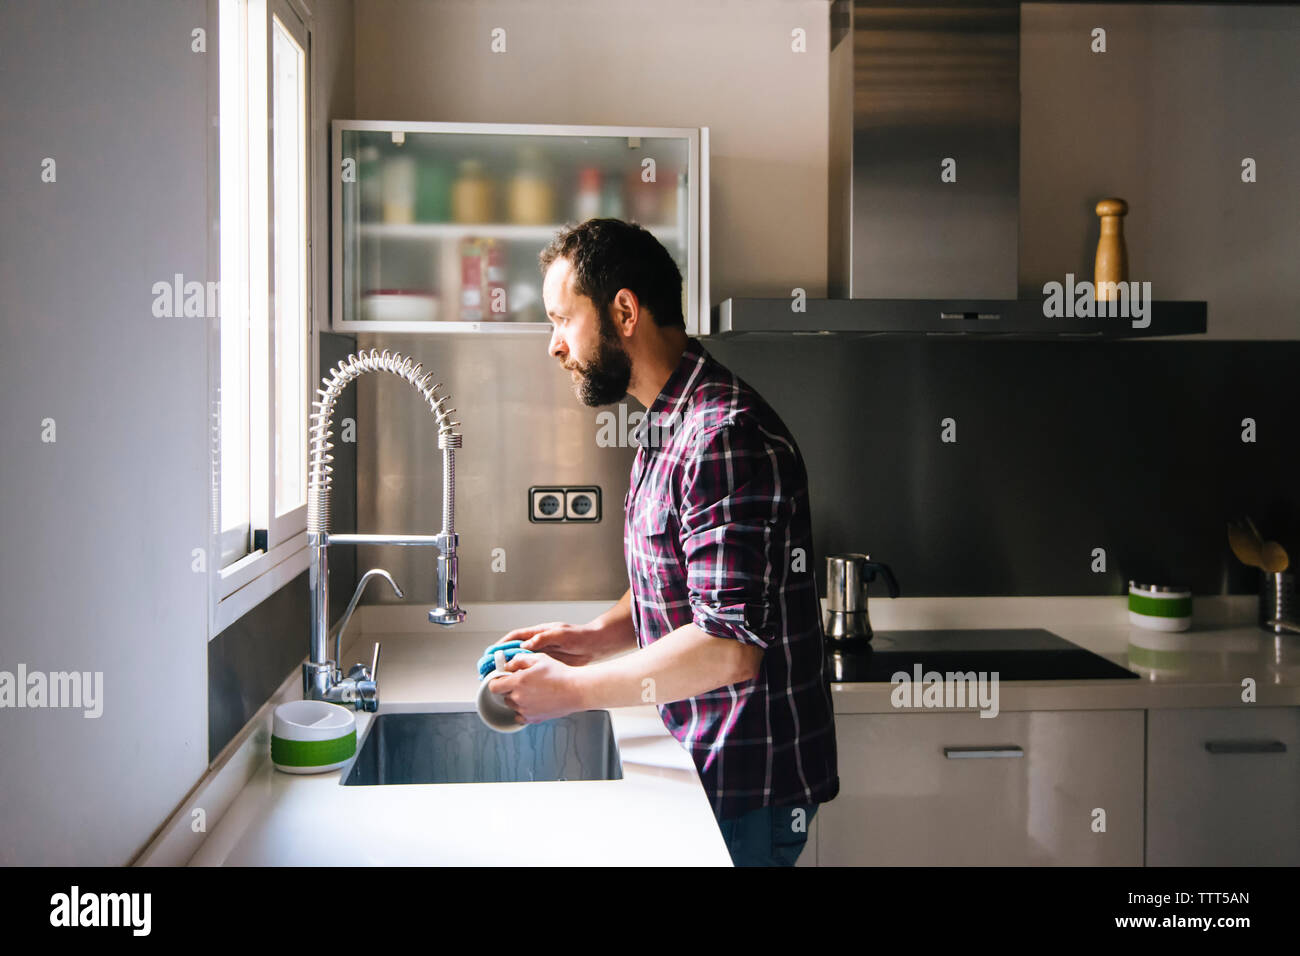 Man with beard and plaid shirt washing dishes at home. Stock Photo